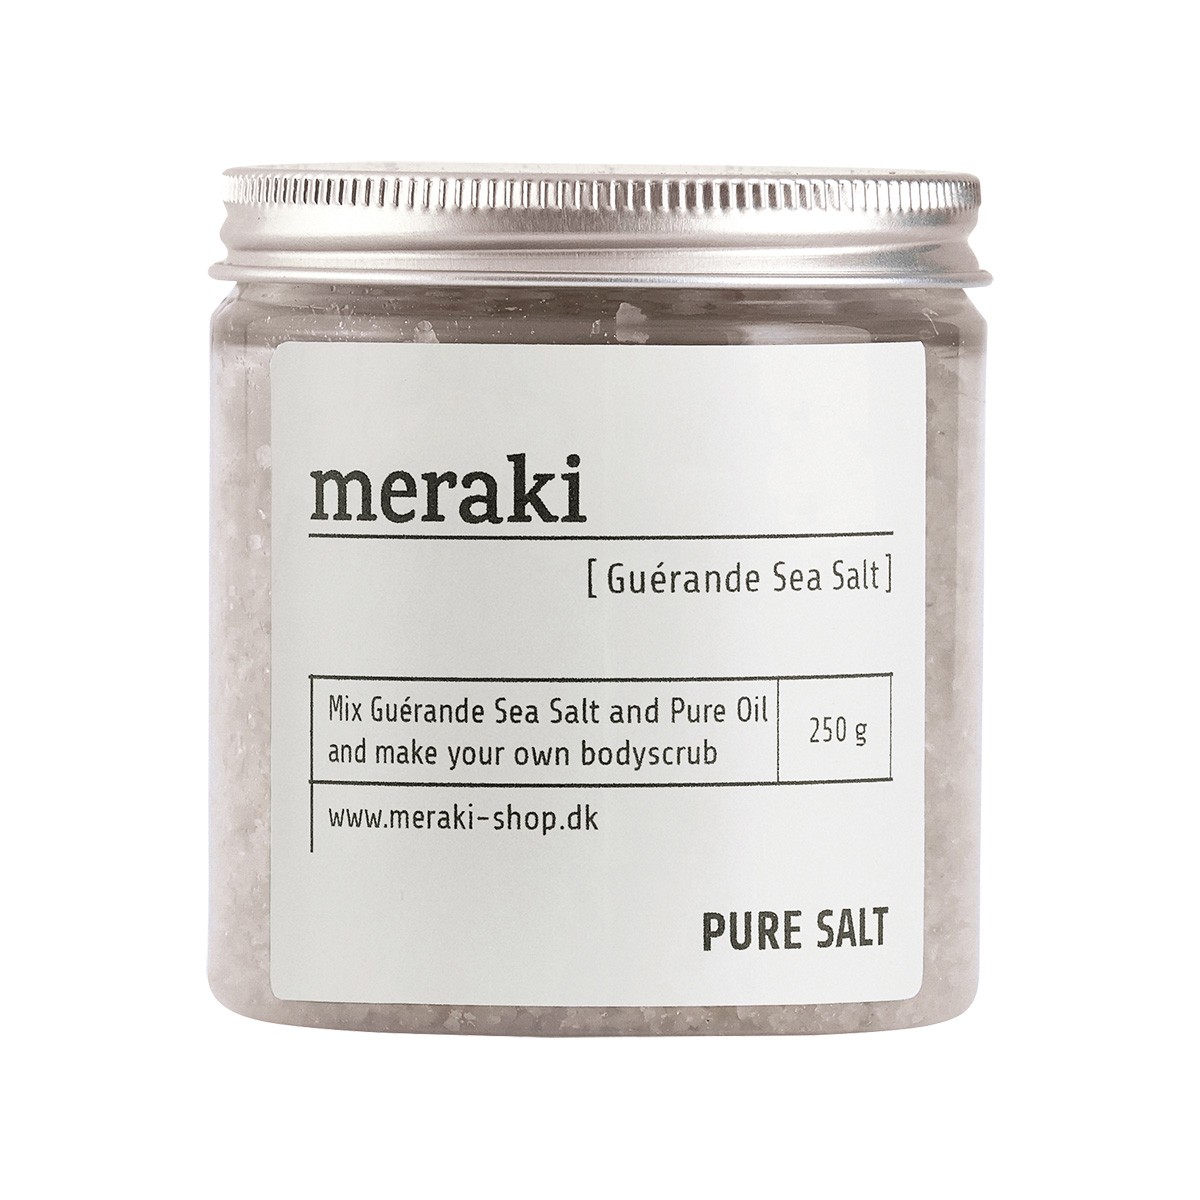 Meraki Pure Salt